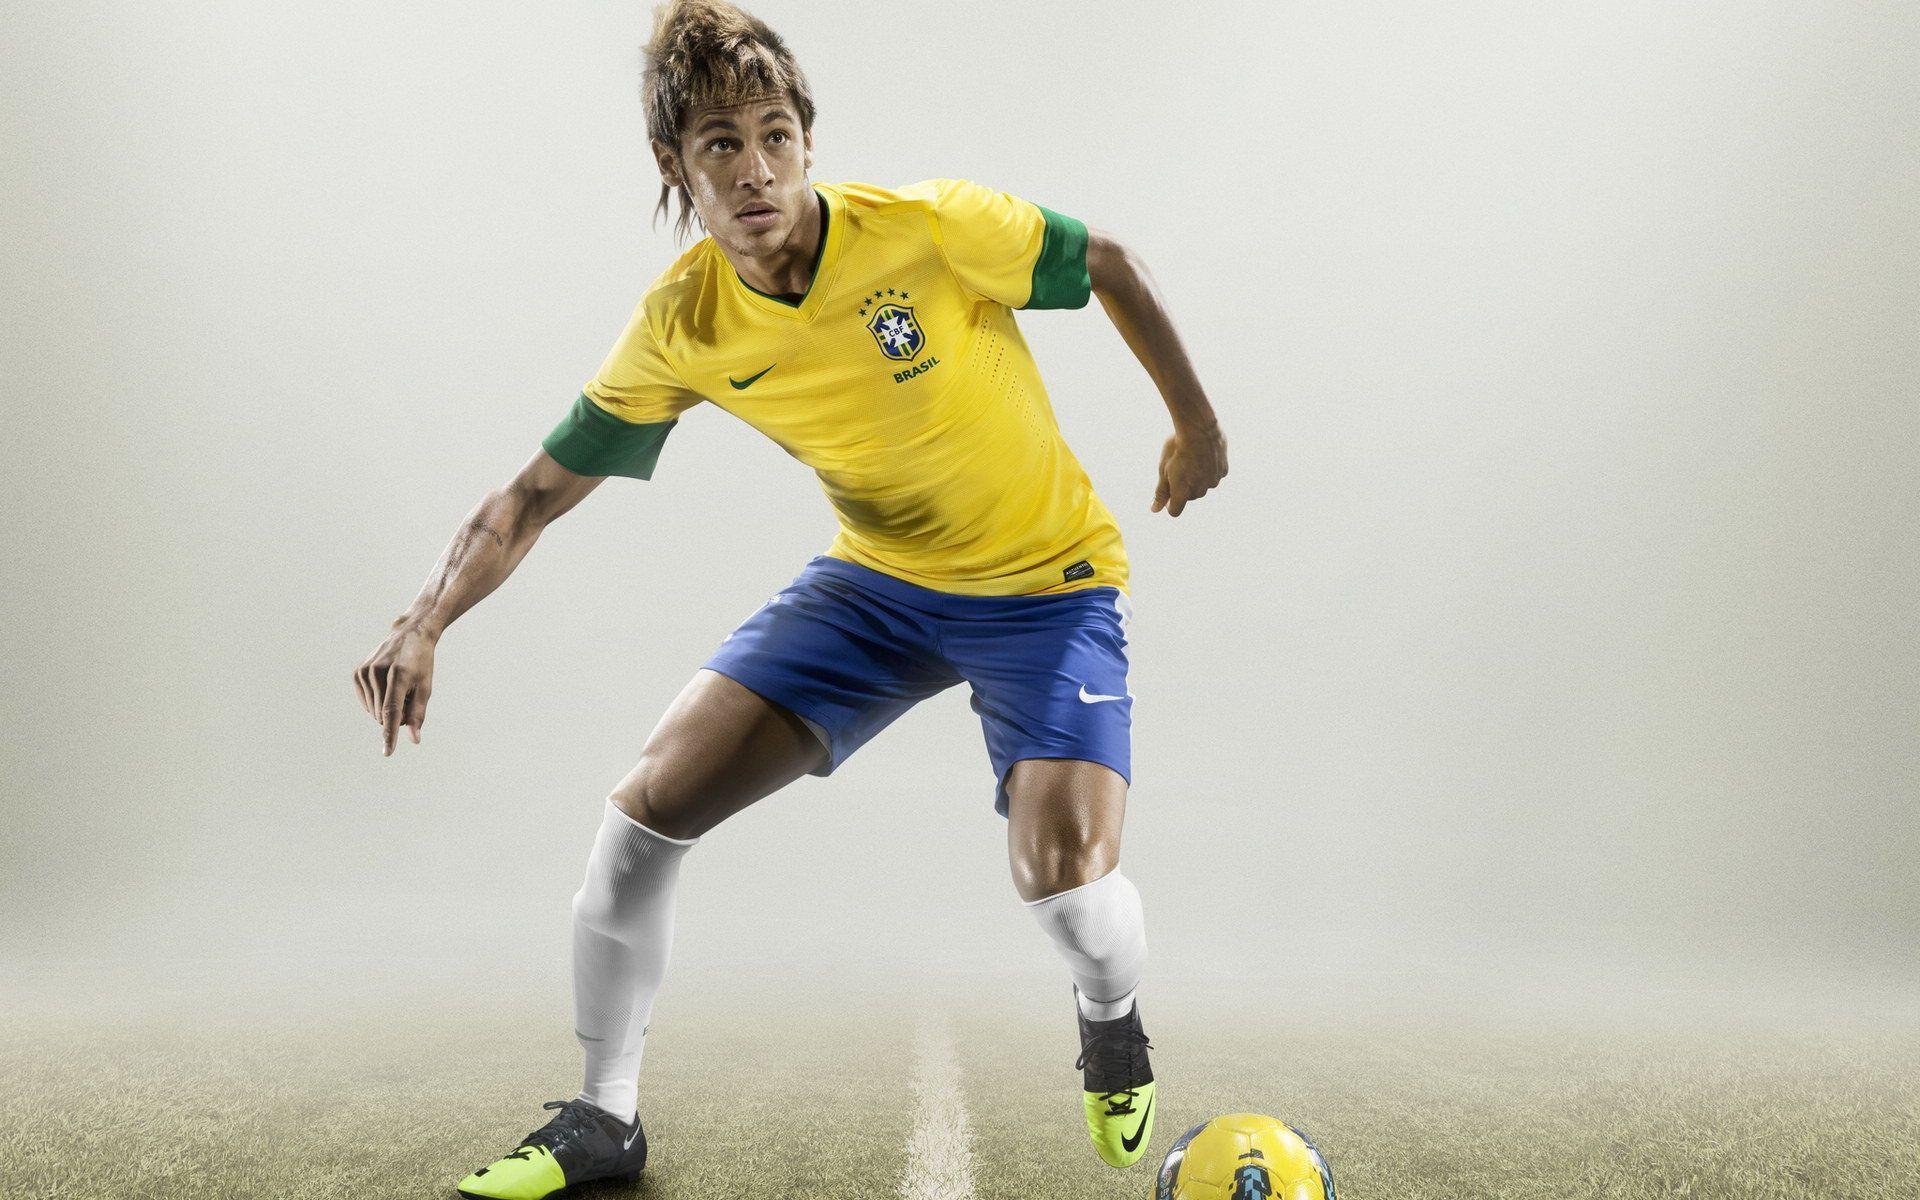 Neymar Soccer Player Windows 8.1 10 Theme And Wallpaper